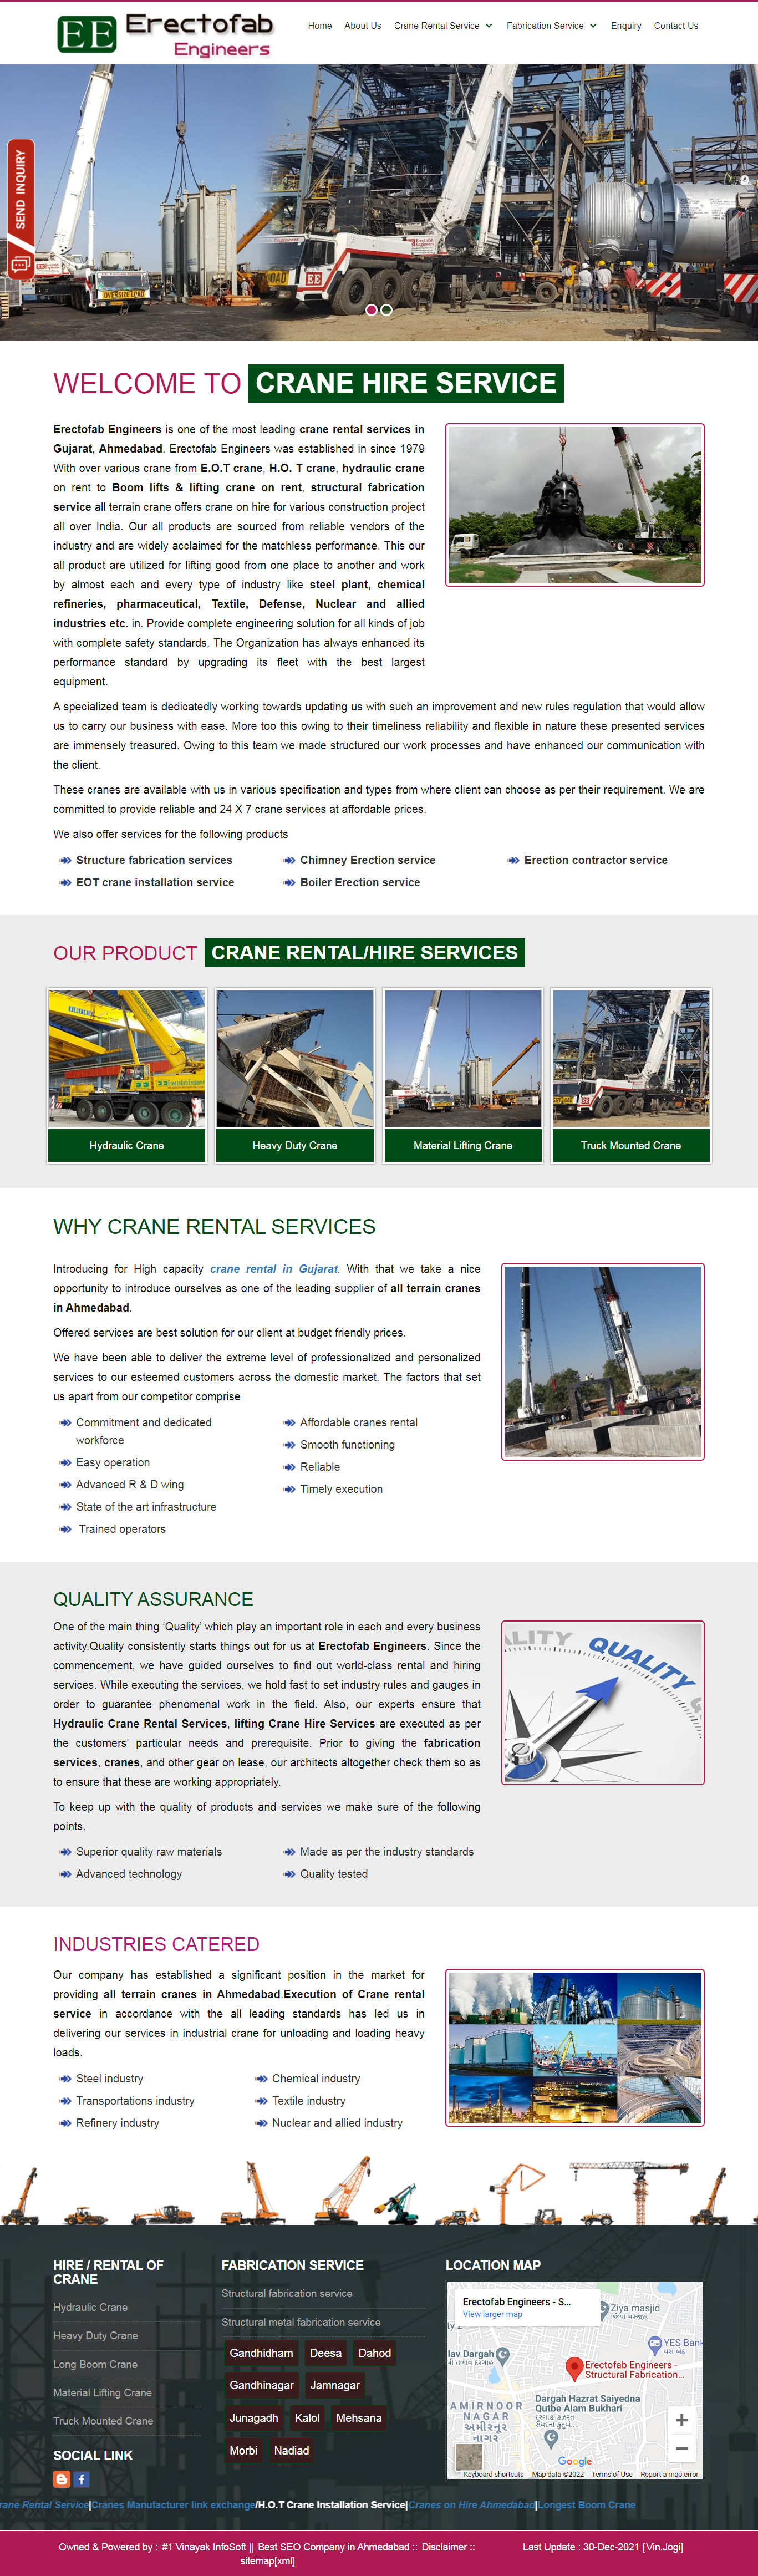 crane hire service